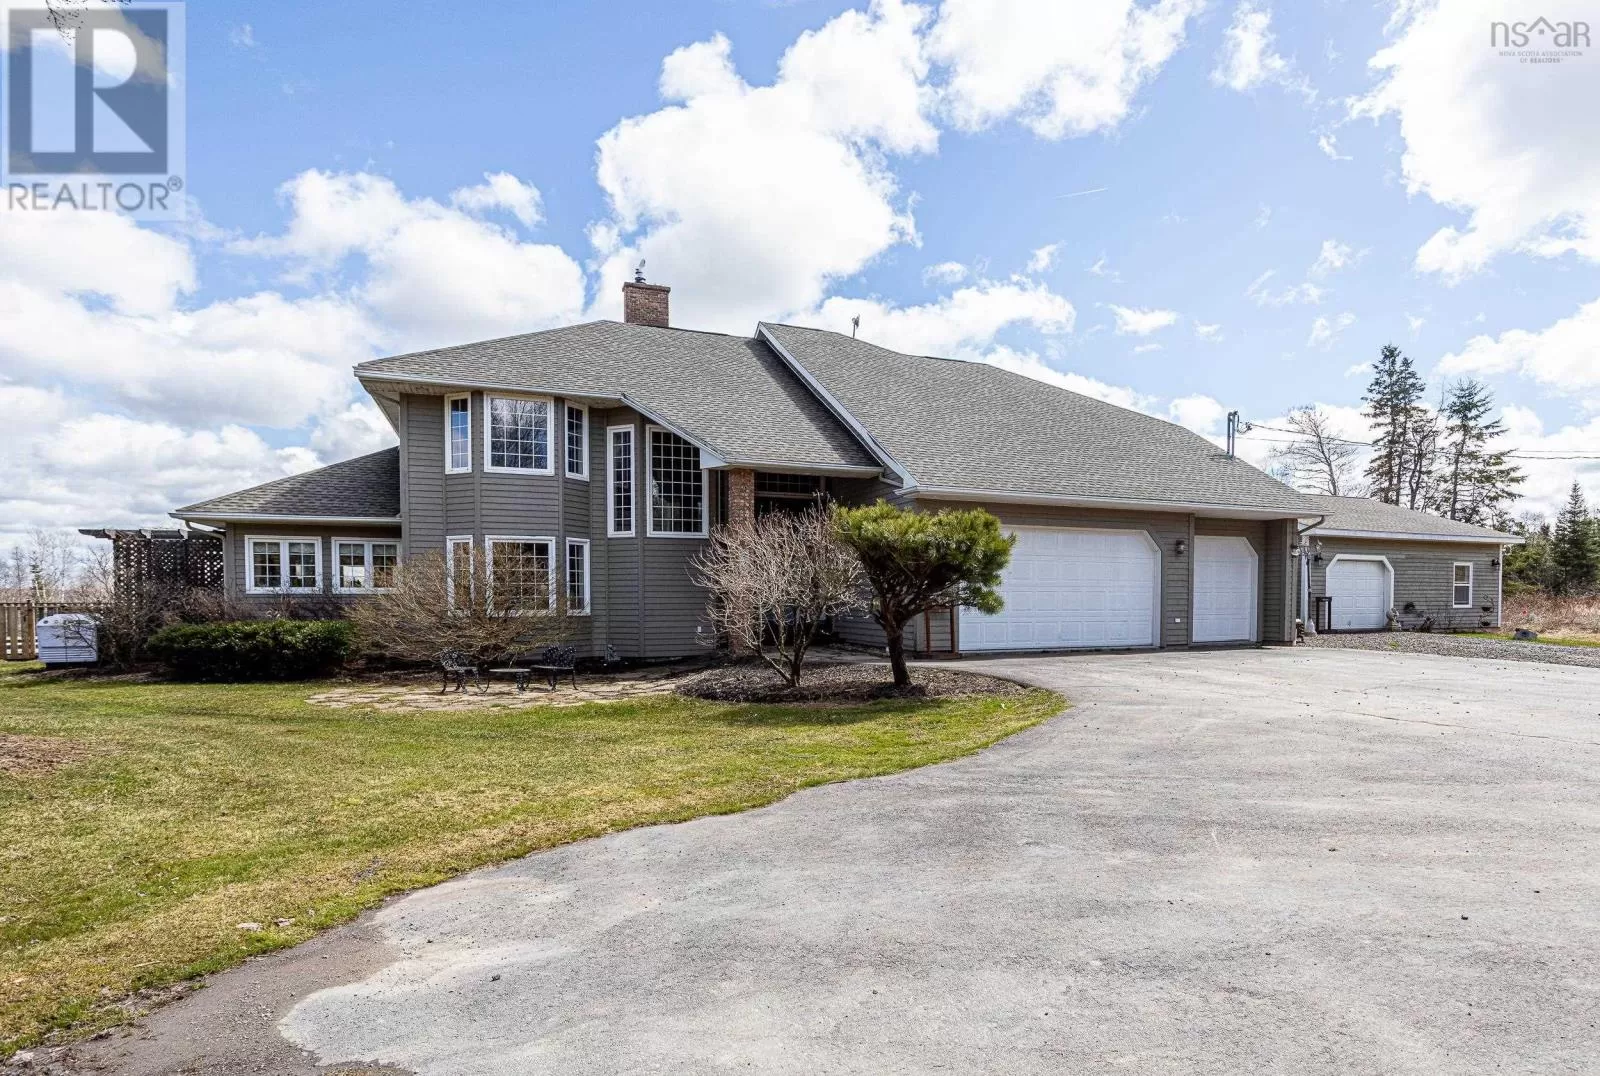 House for rent: 359 Harmony Ridge Road, Harmony, Nova Scotia B6L 3P5